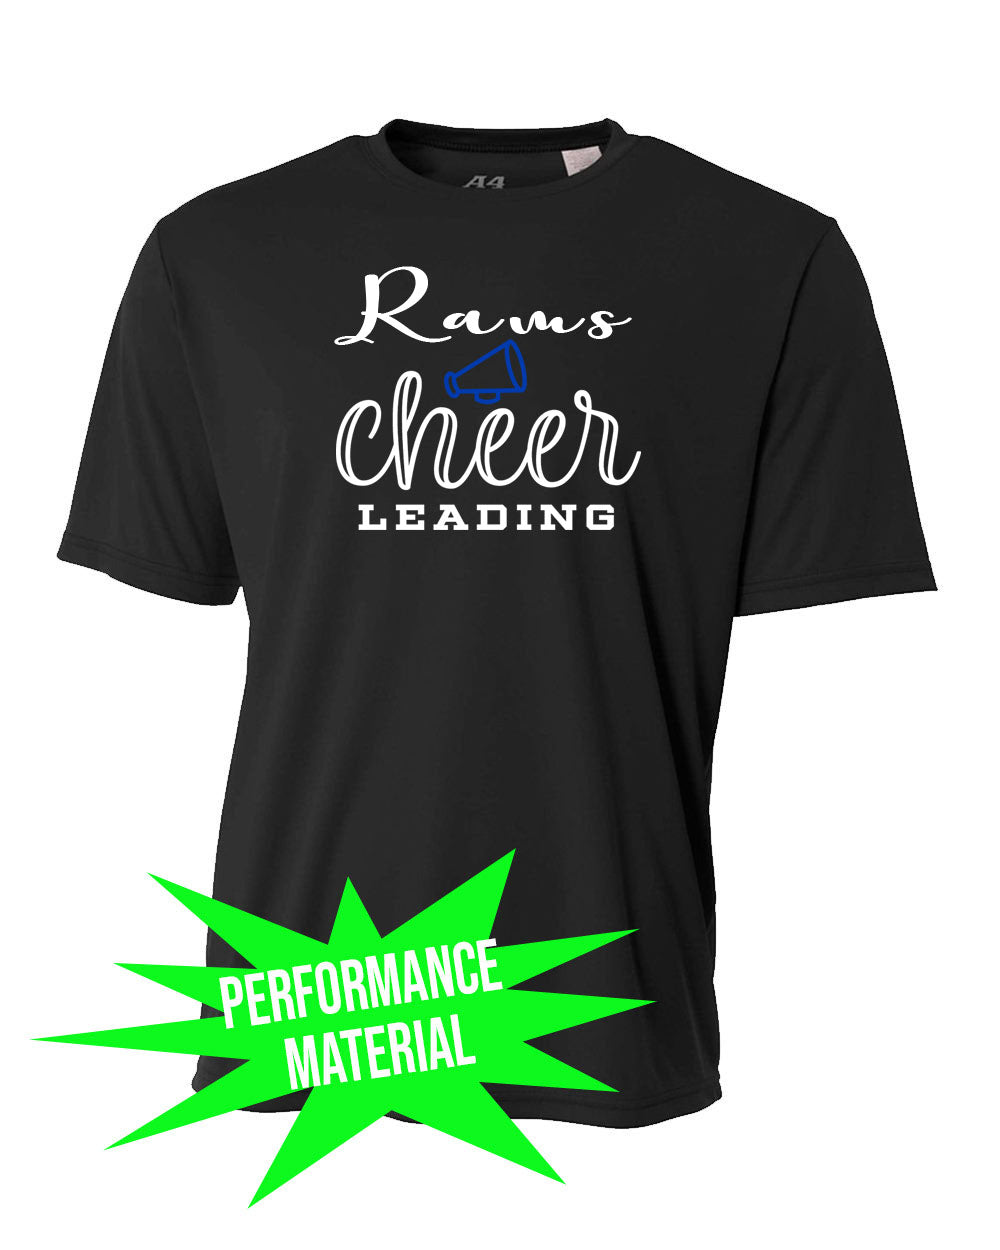 Franklin Cheer Performance Material T-Shirt Design 2